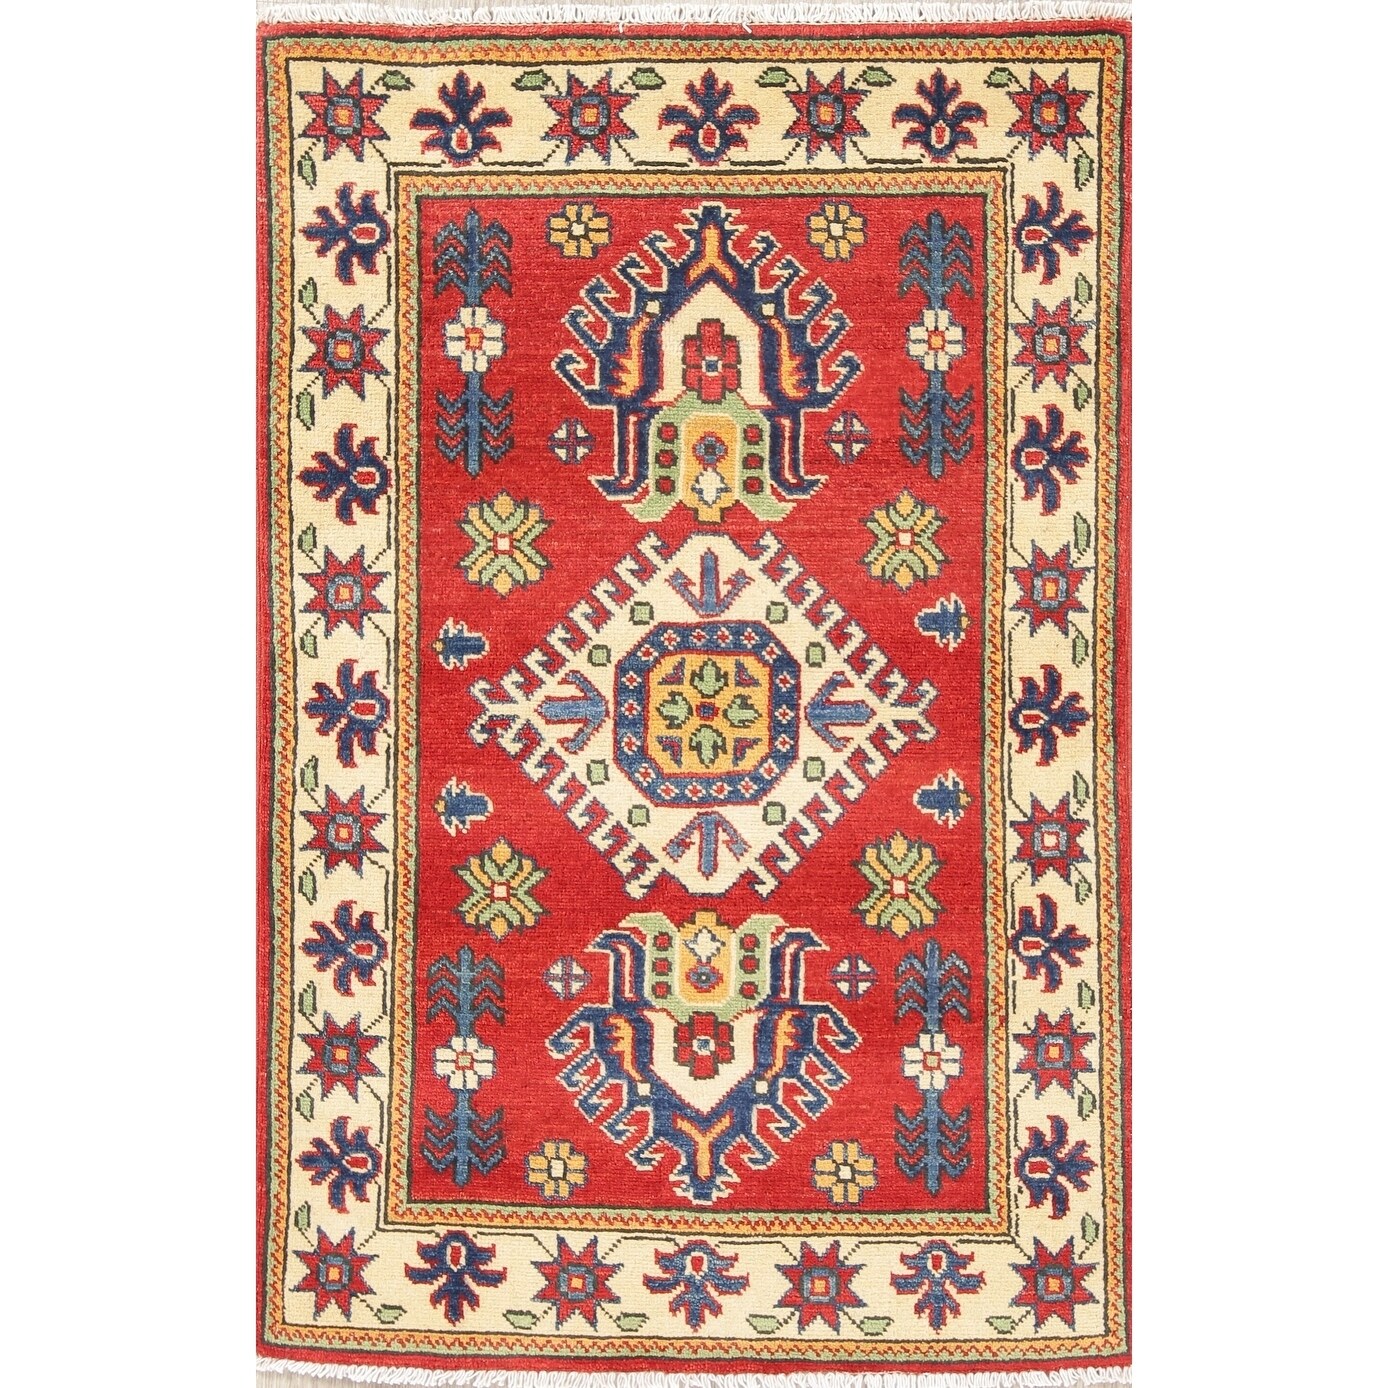 https://ak1.ostkcdn.com/images/products/28330623/Kazak-Oriental-Hand-Knotted-Wool-Pakistani-Traditional-Area-Rug-40-x-28-55c2016c-f6a7-41f3-ba59-b75a1320db48.jpg